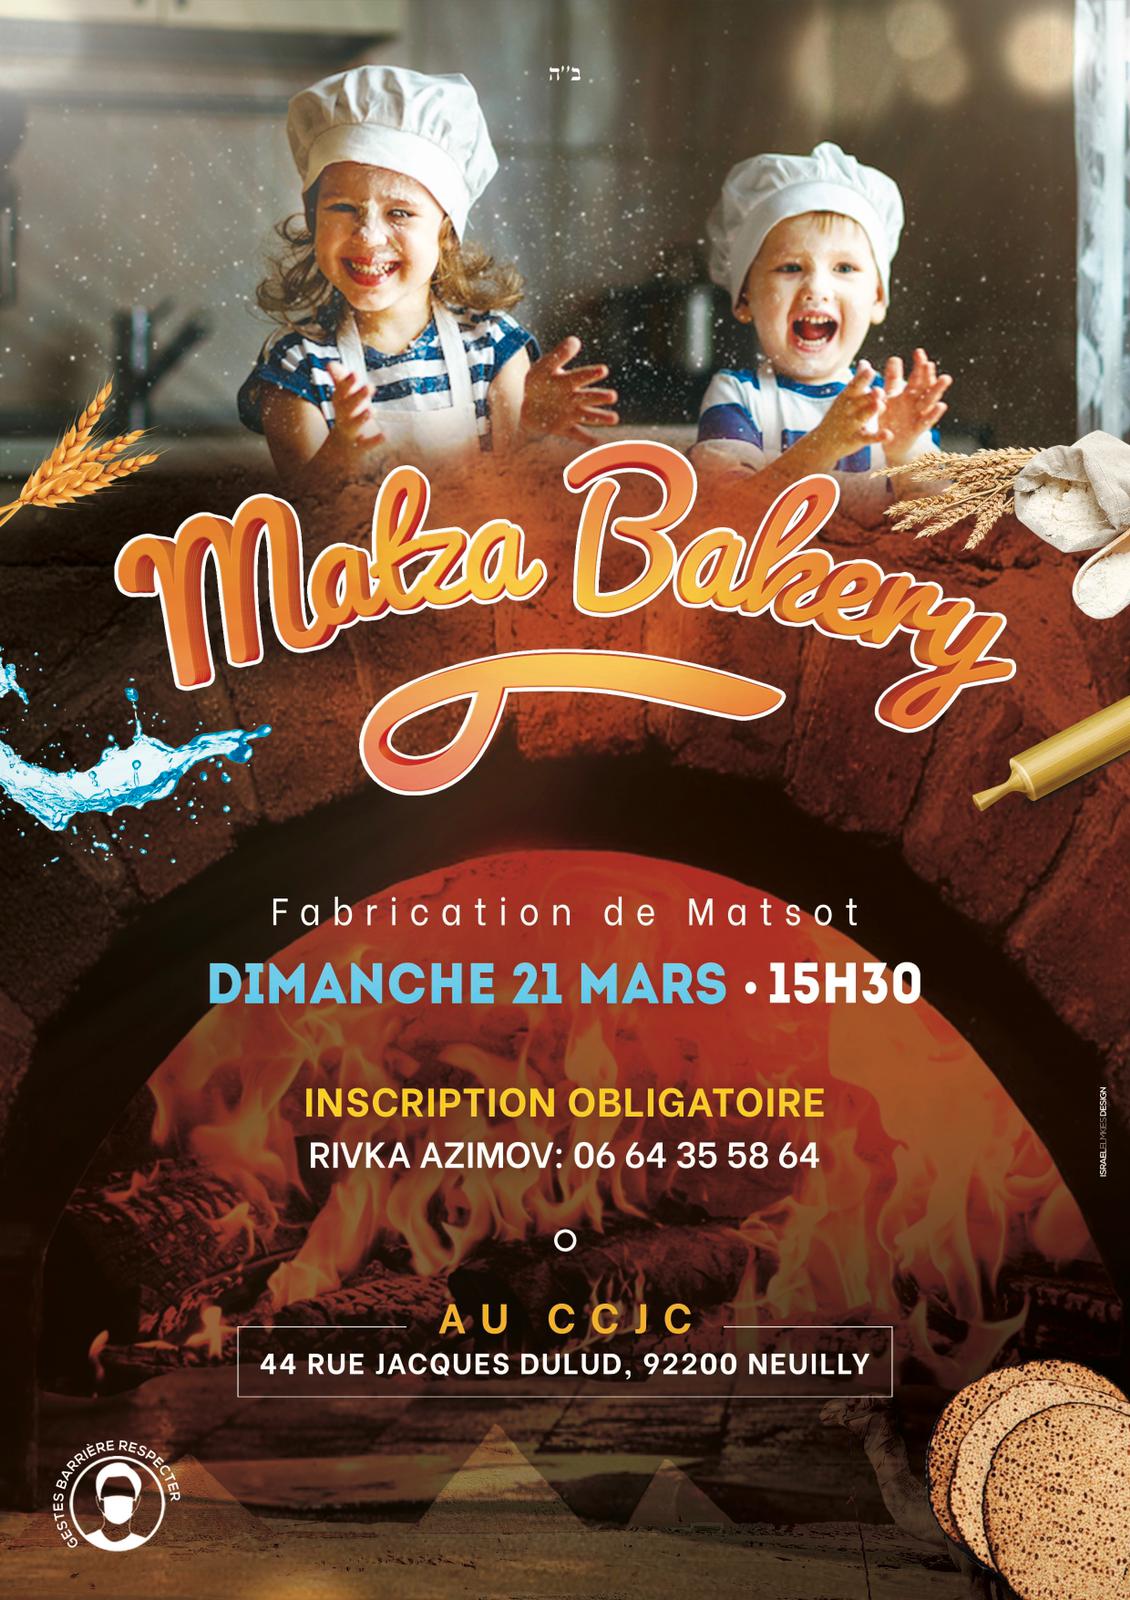 Matza Bakery CCJC